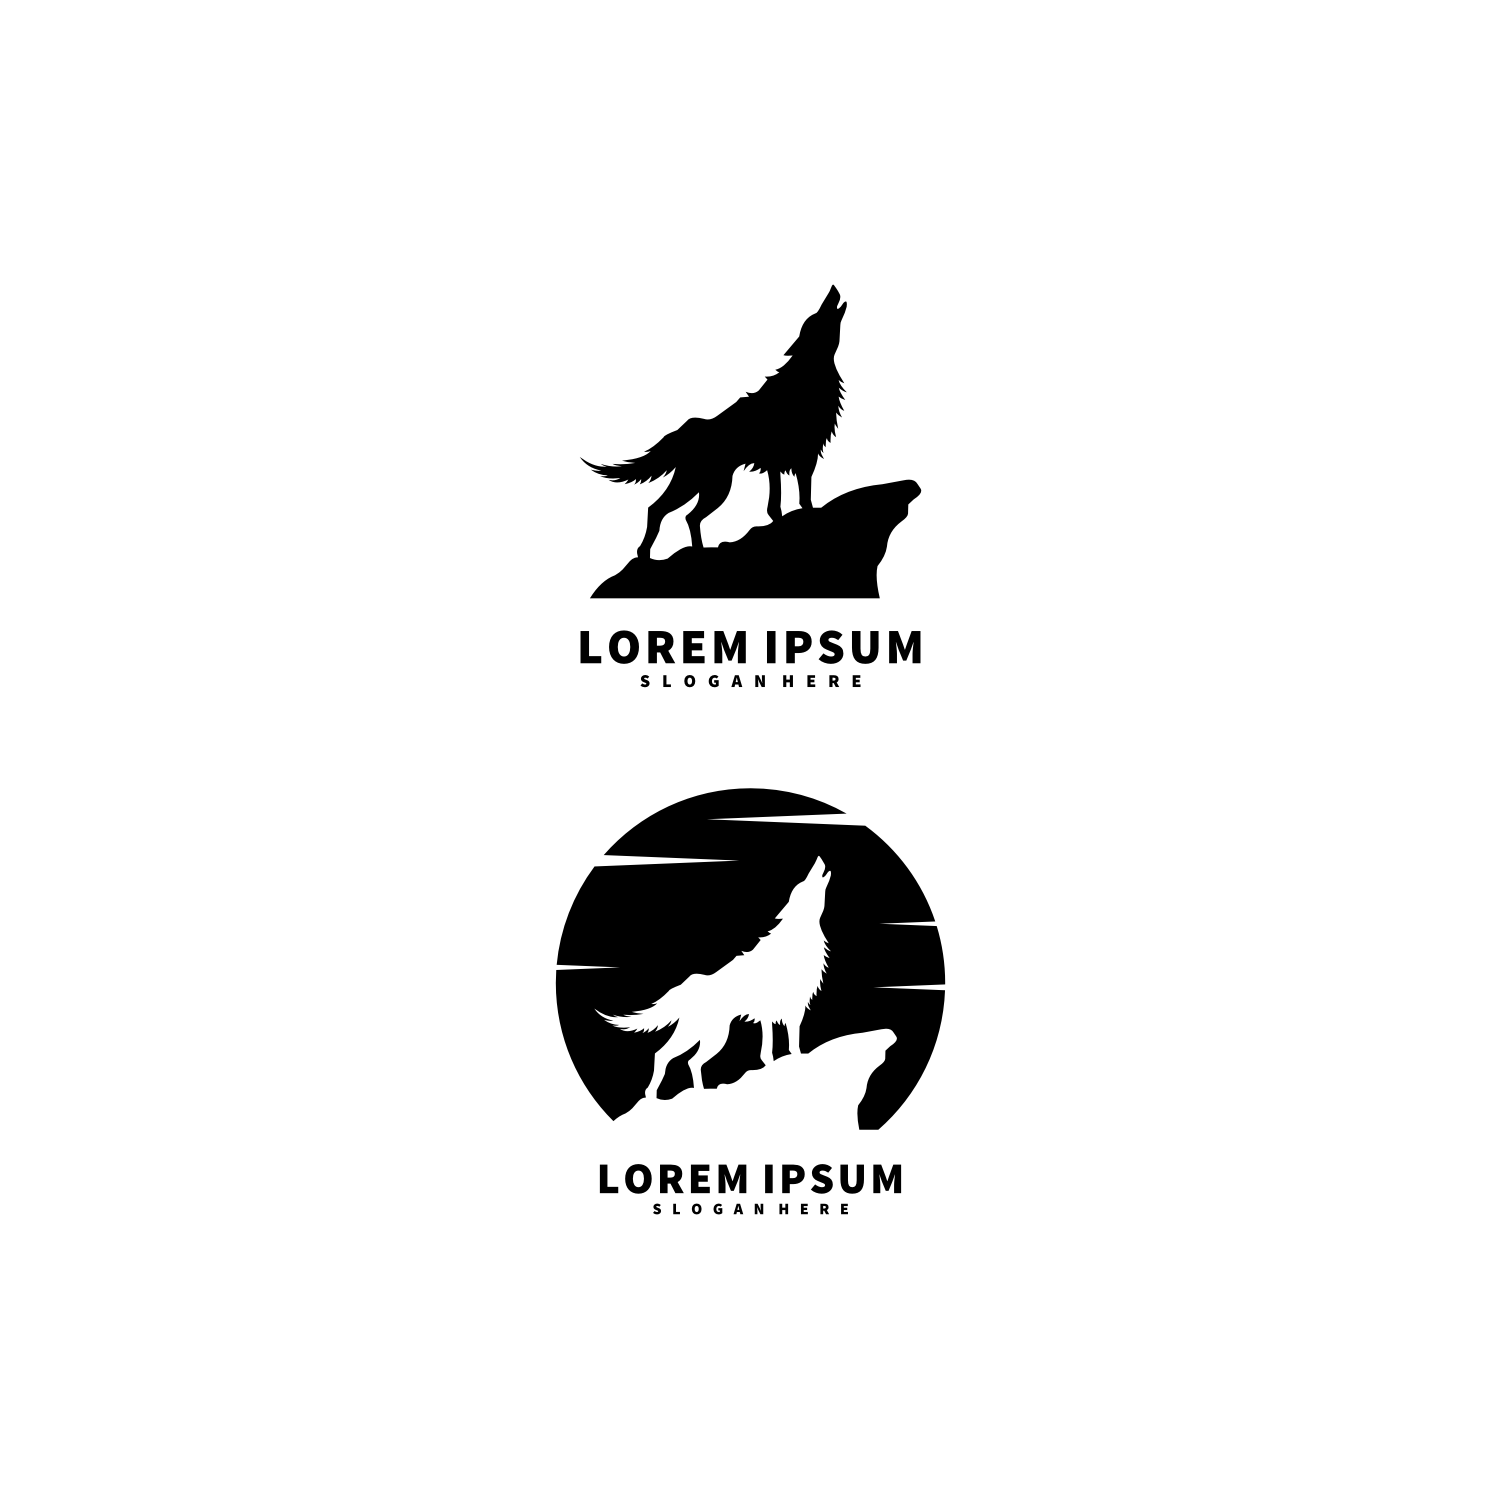 howling wolf logo